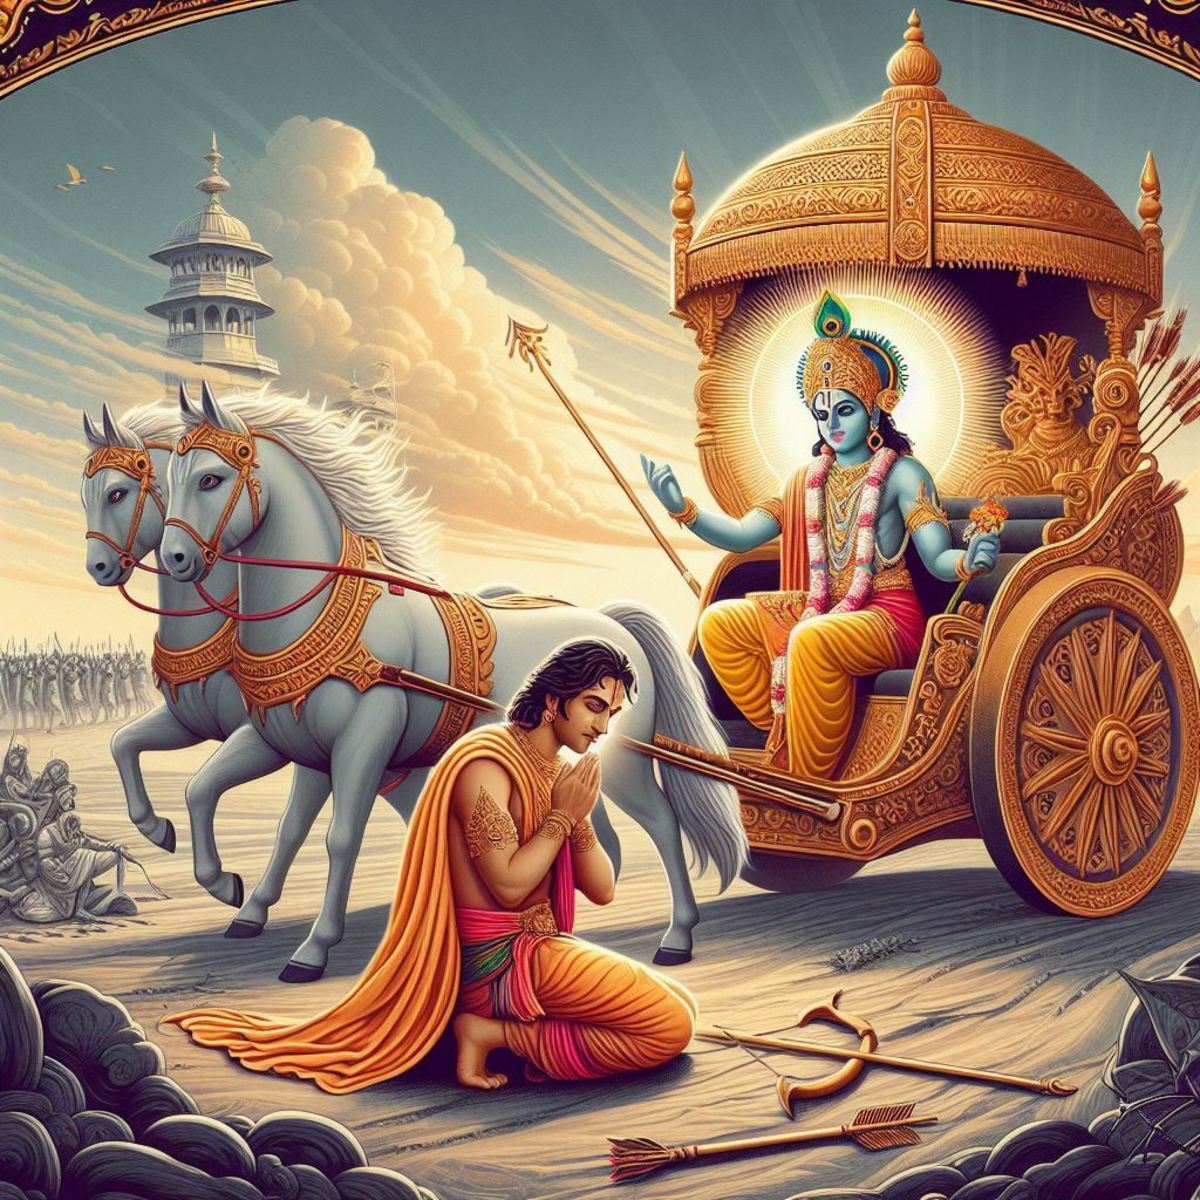 Bhagavad Gita - The Celestial Book